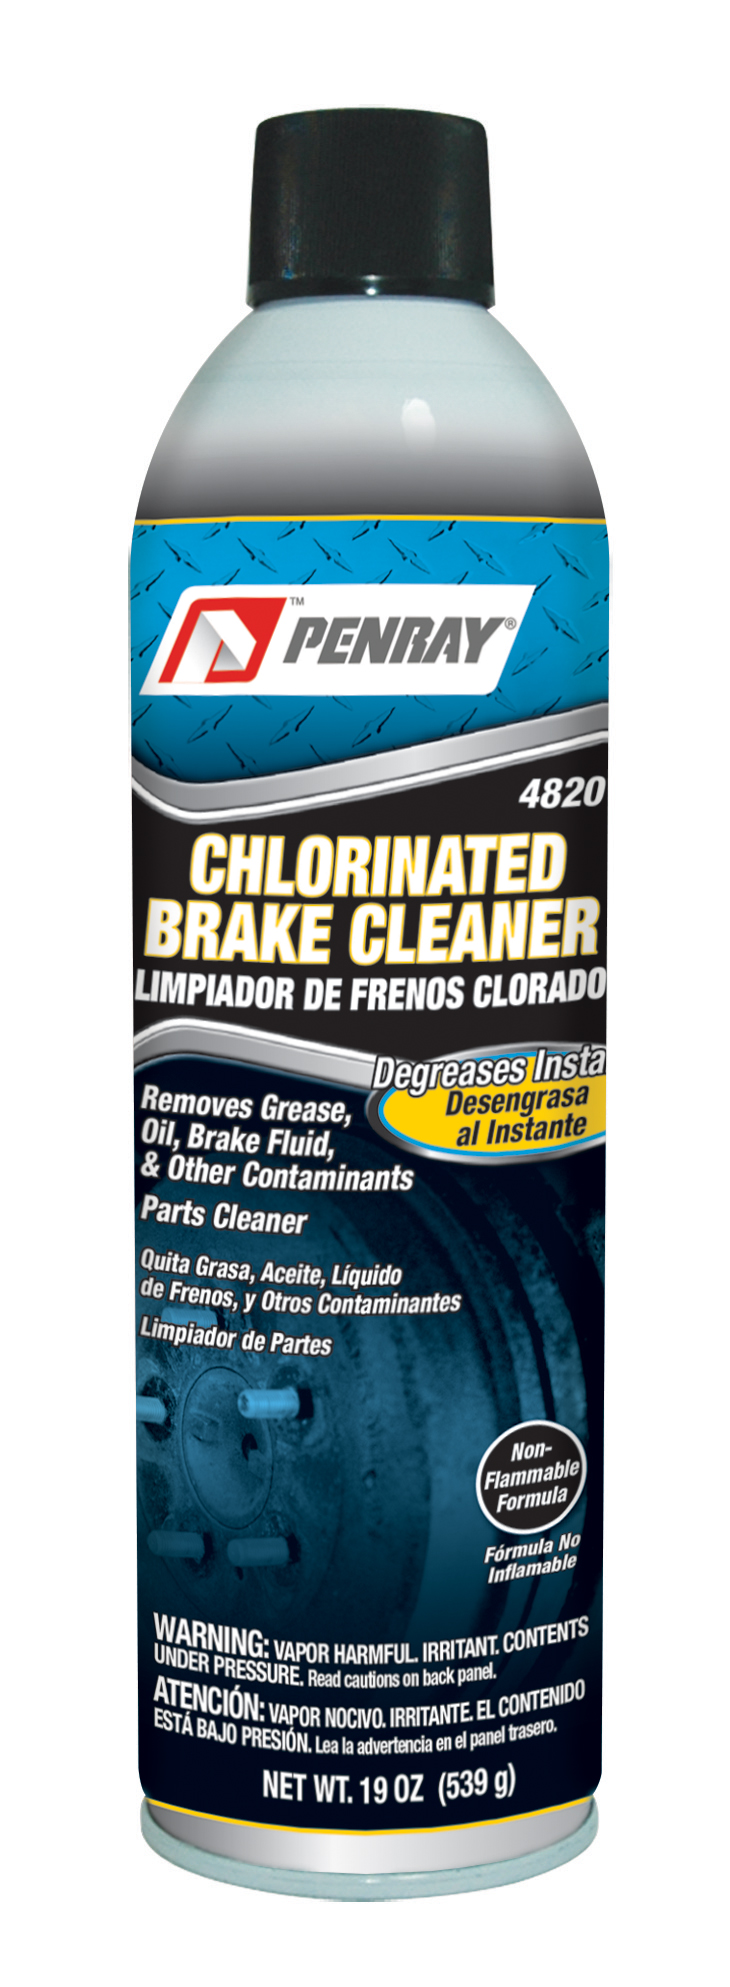 4820 CHLORINATED BRAKE CLEANER - Penray